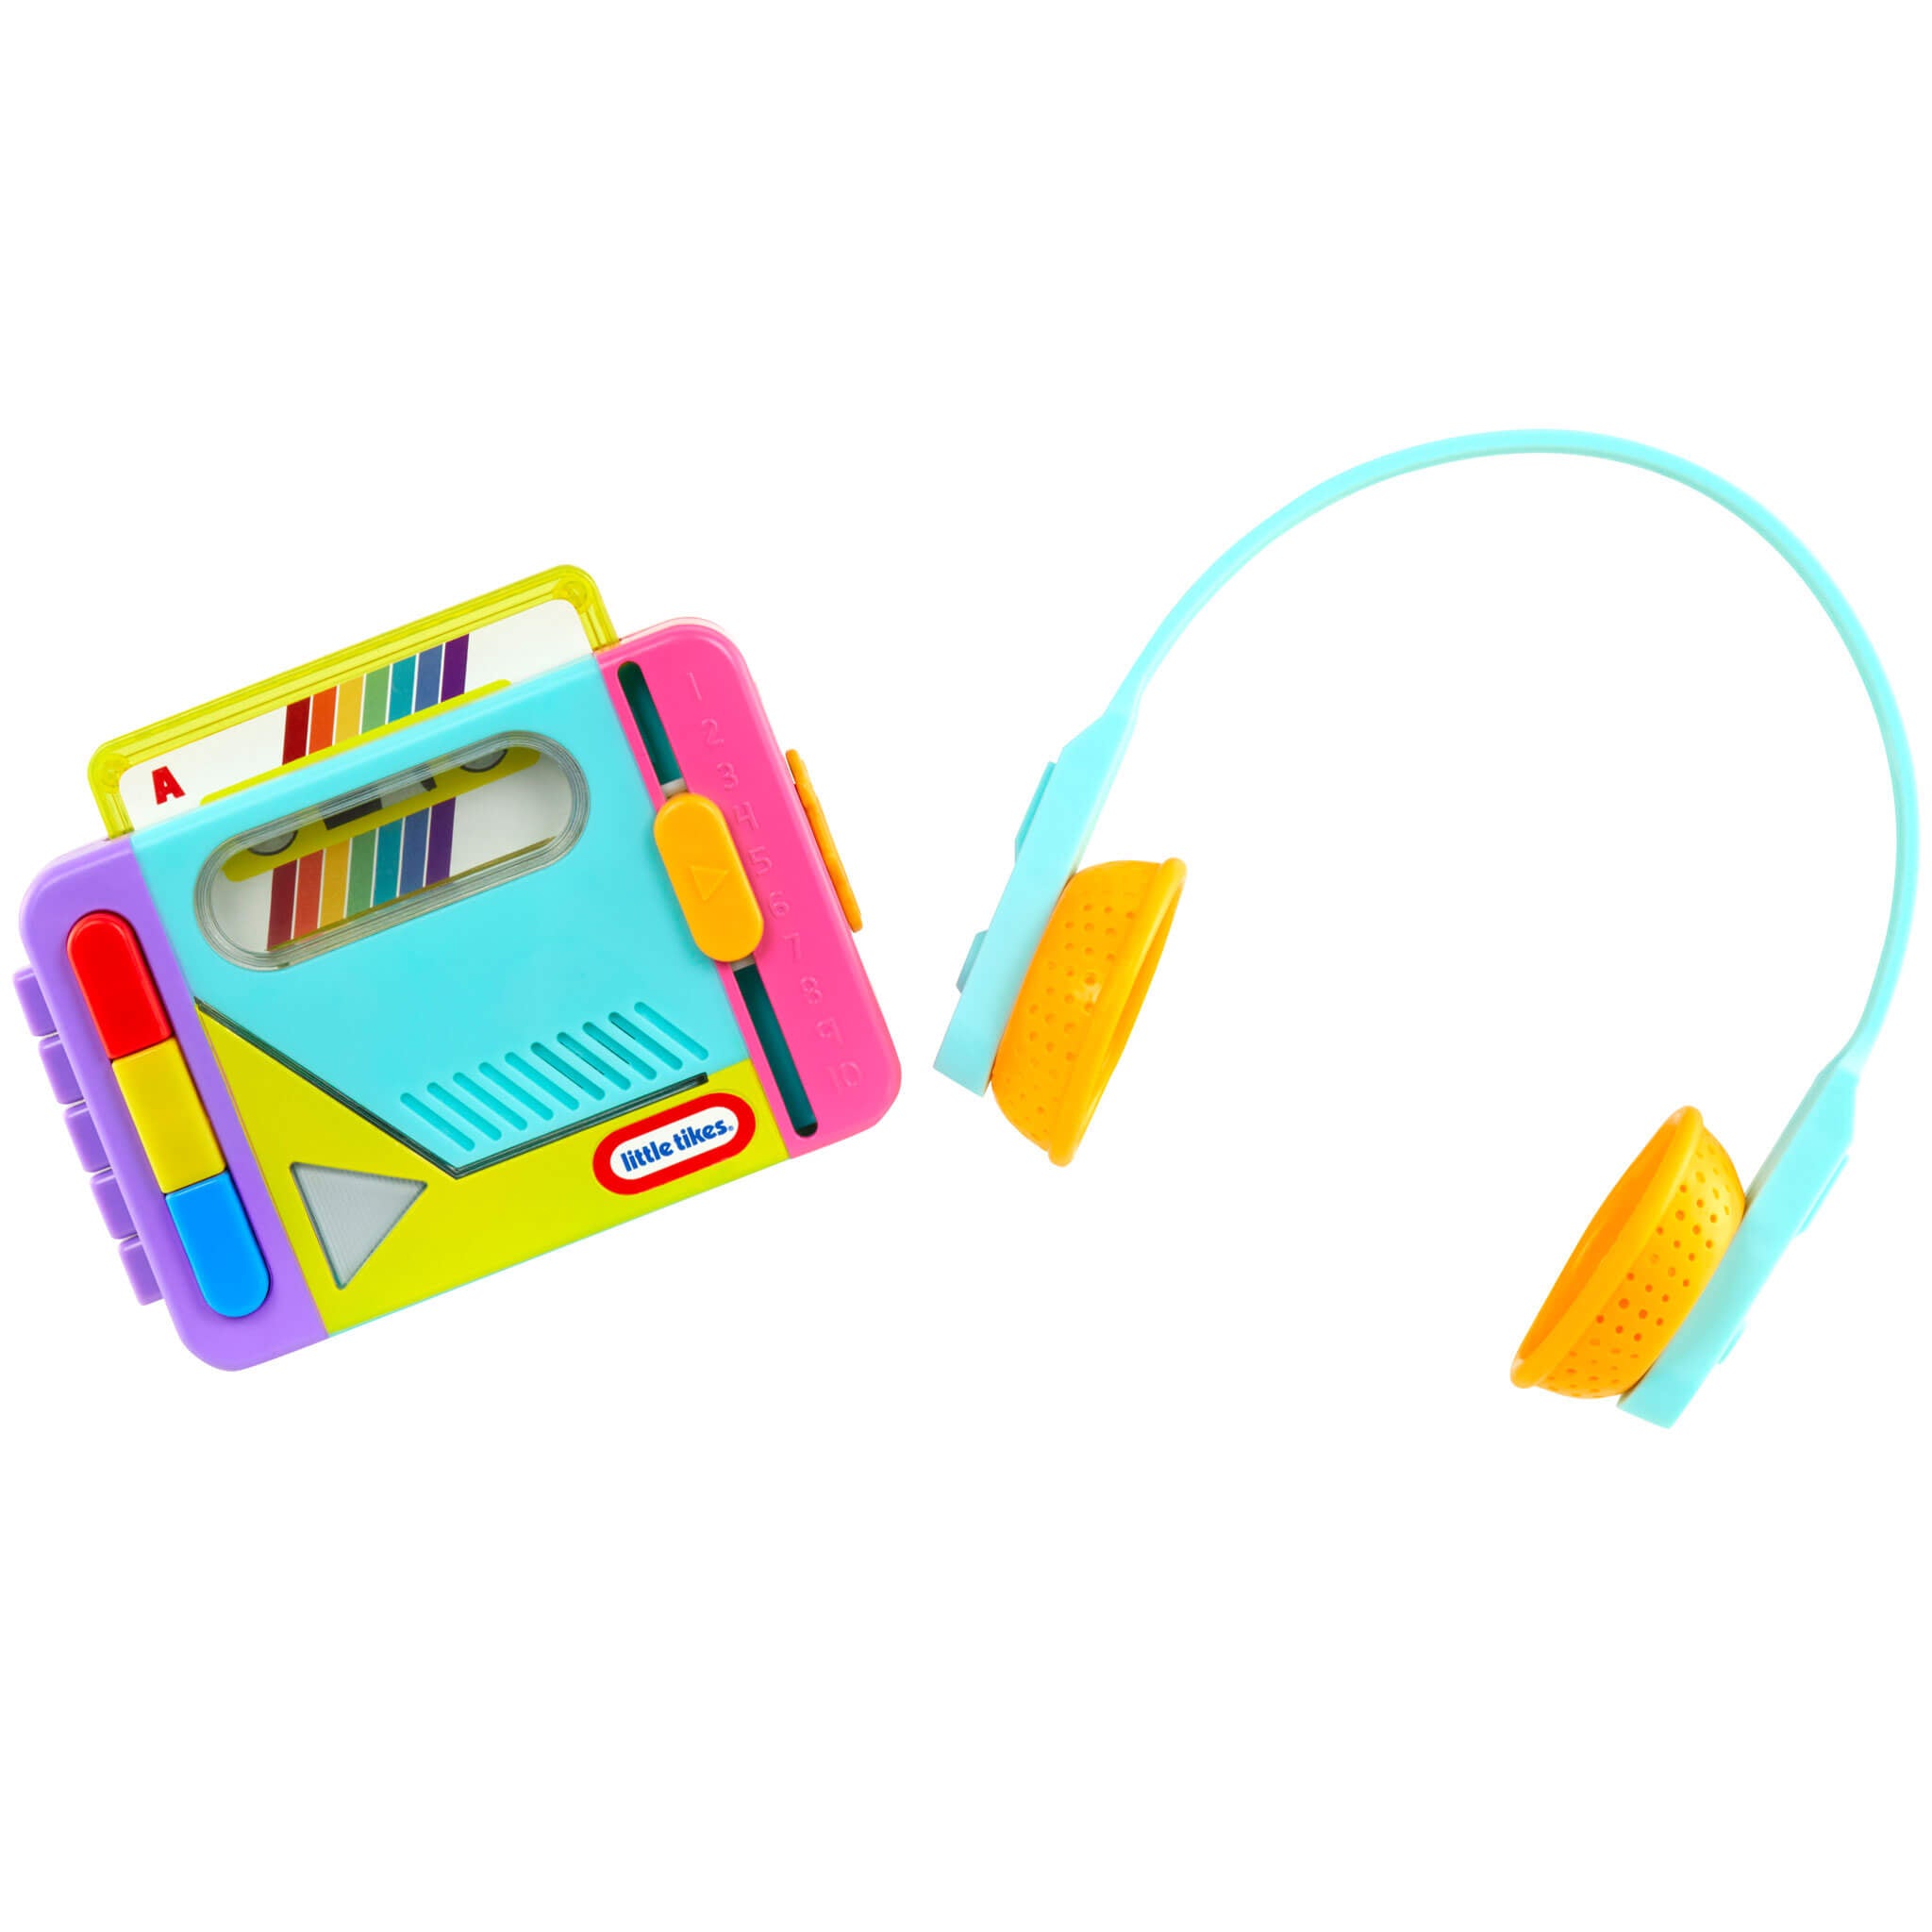 90s music toys